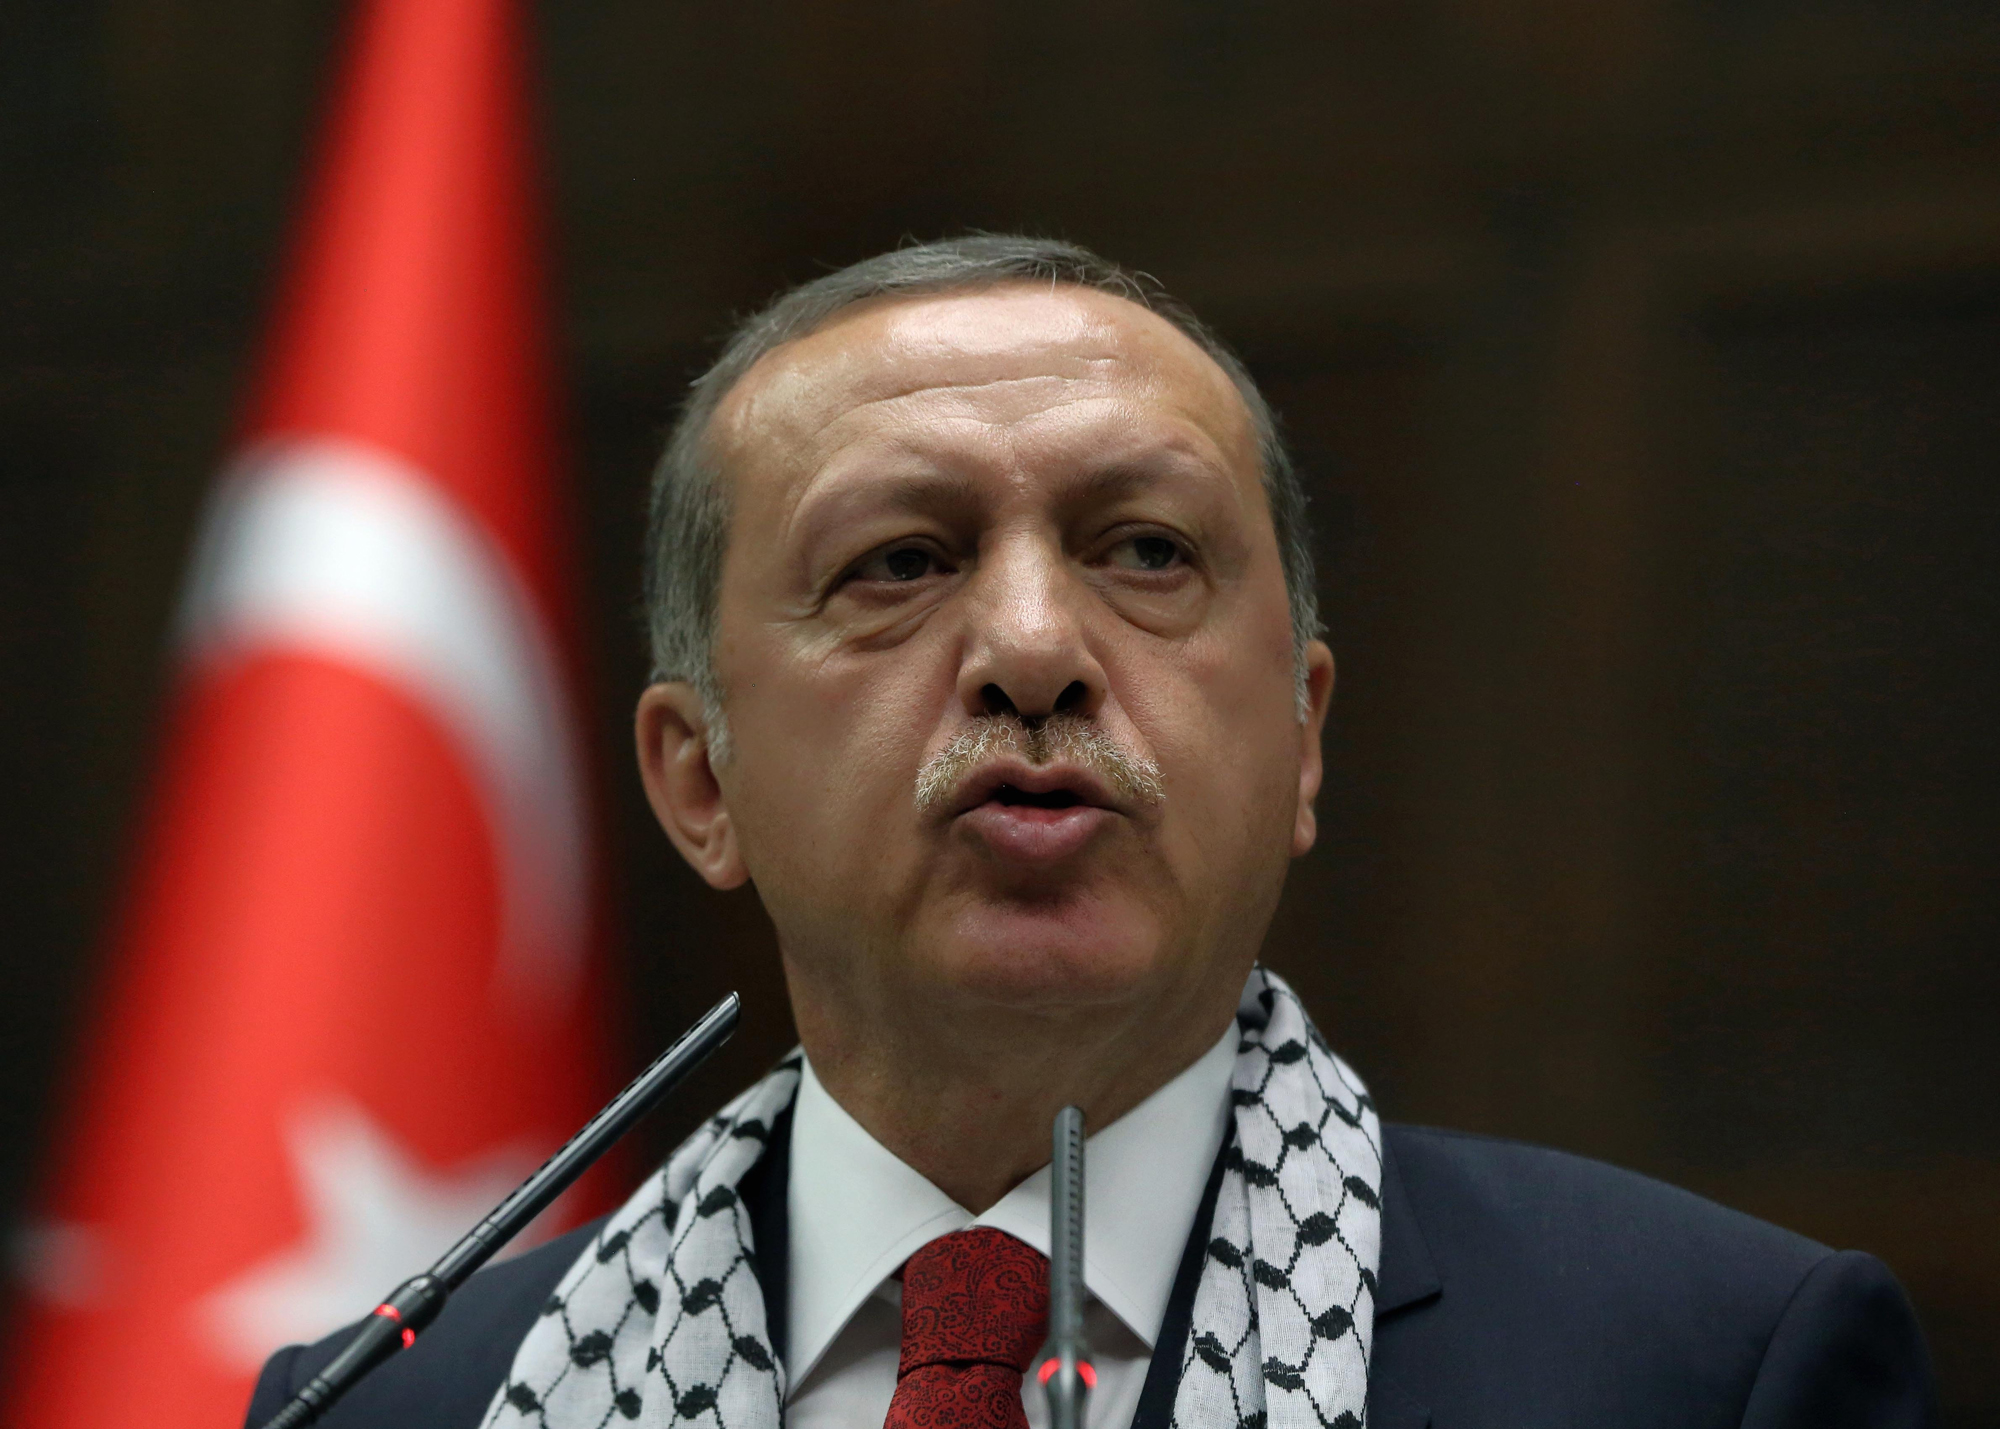 Turkish Prime Minister Recep Tayyip Erdogan addresses his supporters at parliament wearing a Palestinian keffiyeh, in Ankara, July 22, 2014. (Burhan Ozbilici—AP)